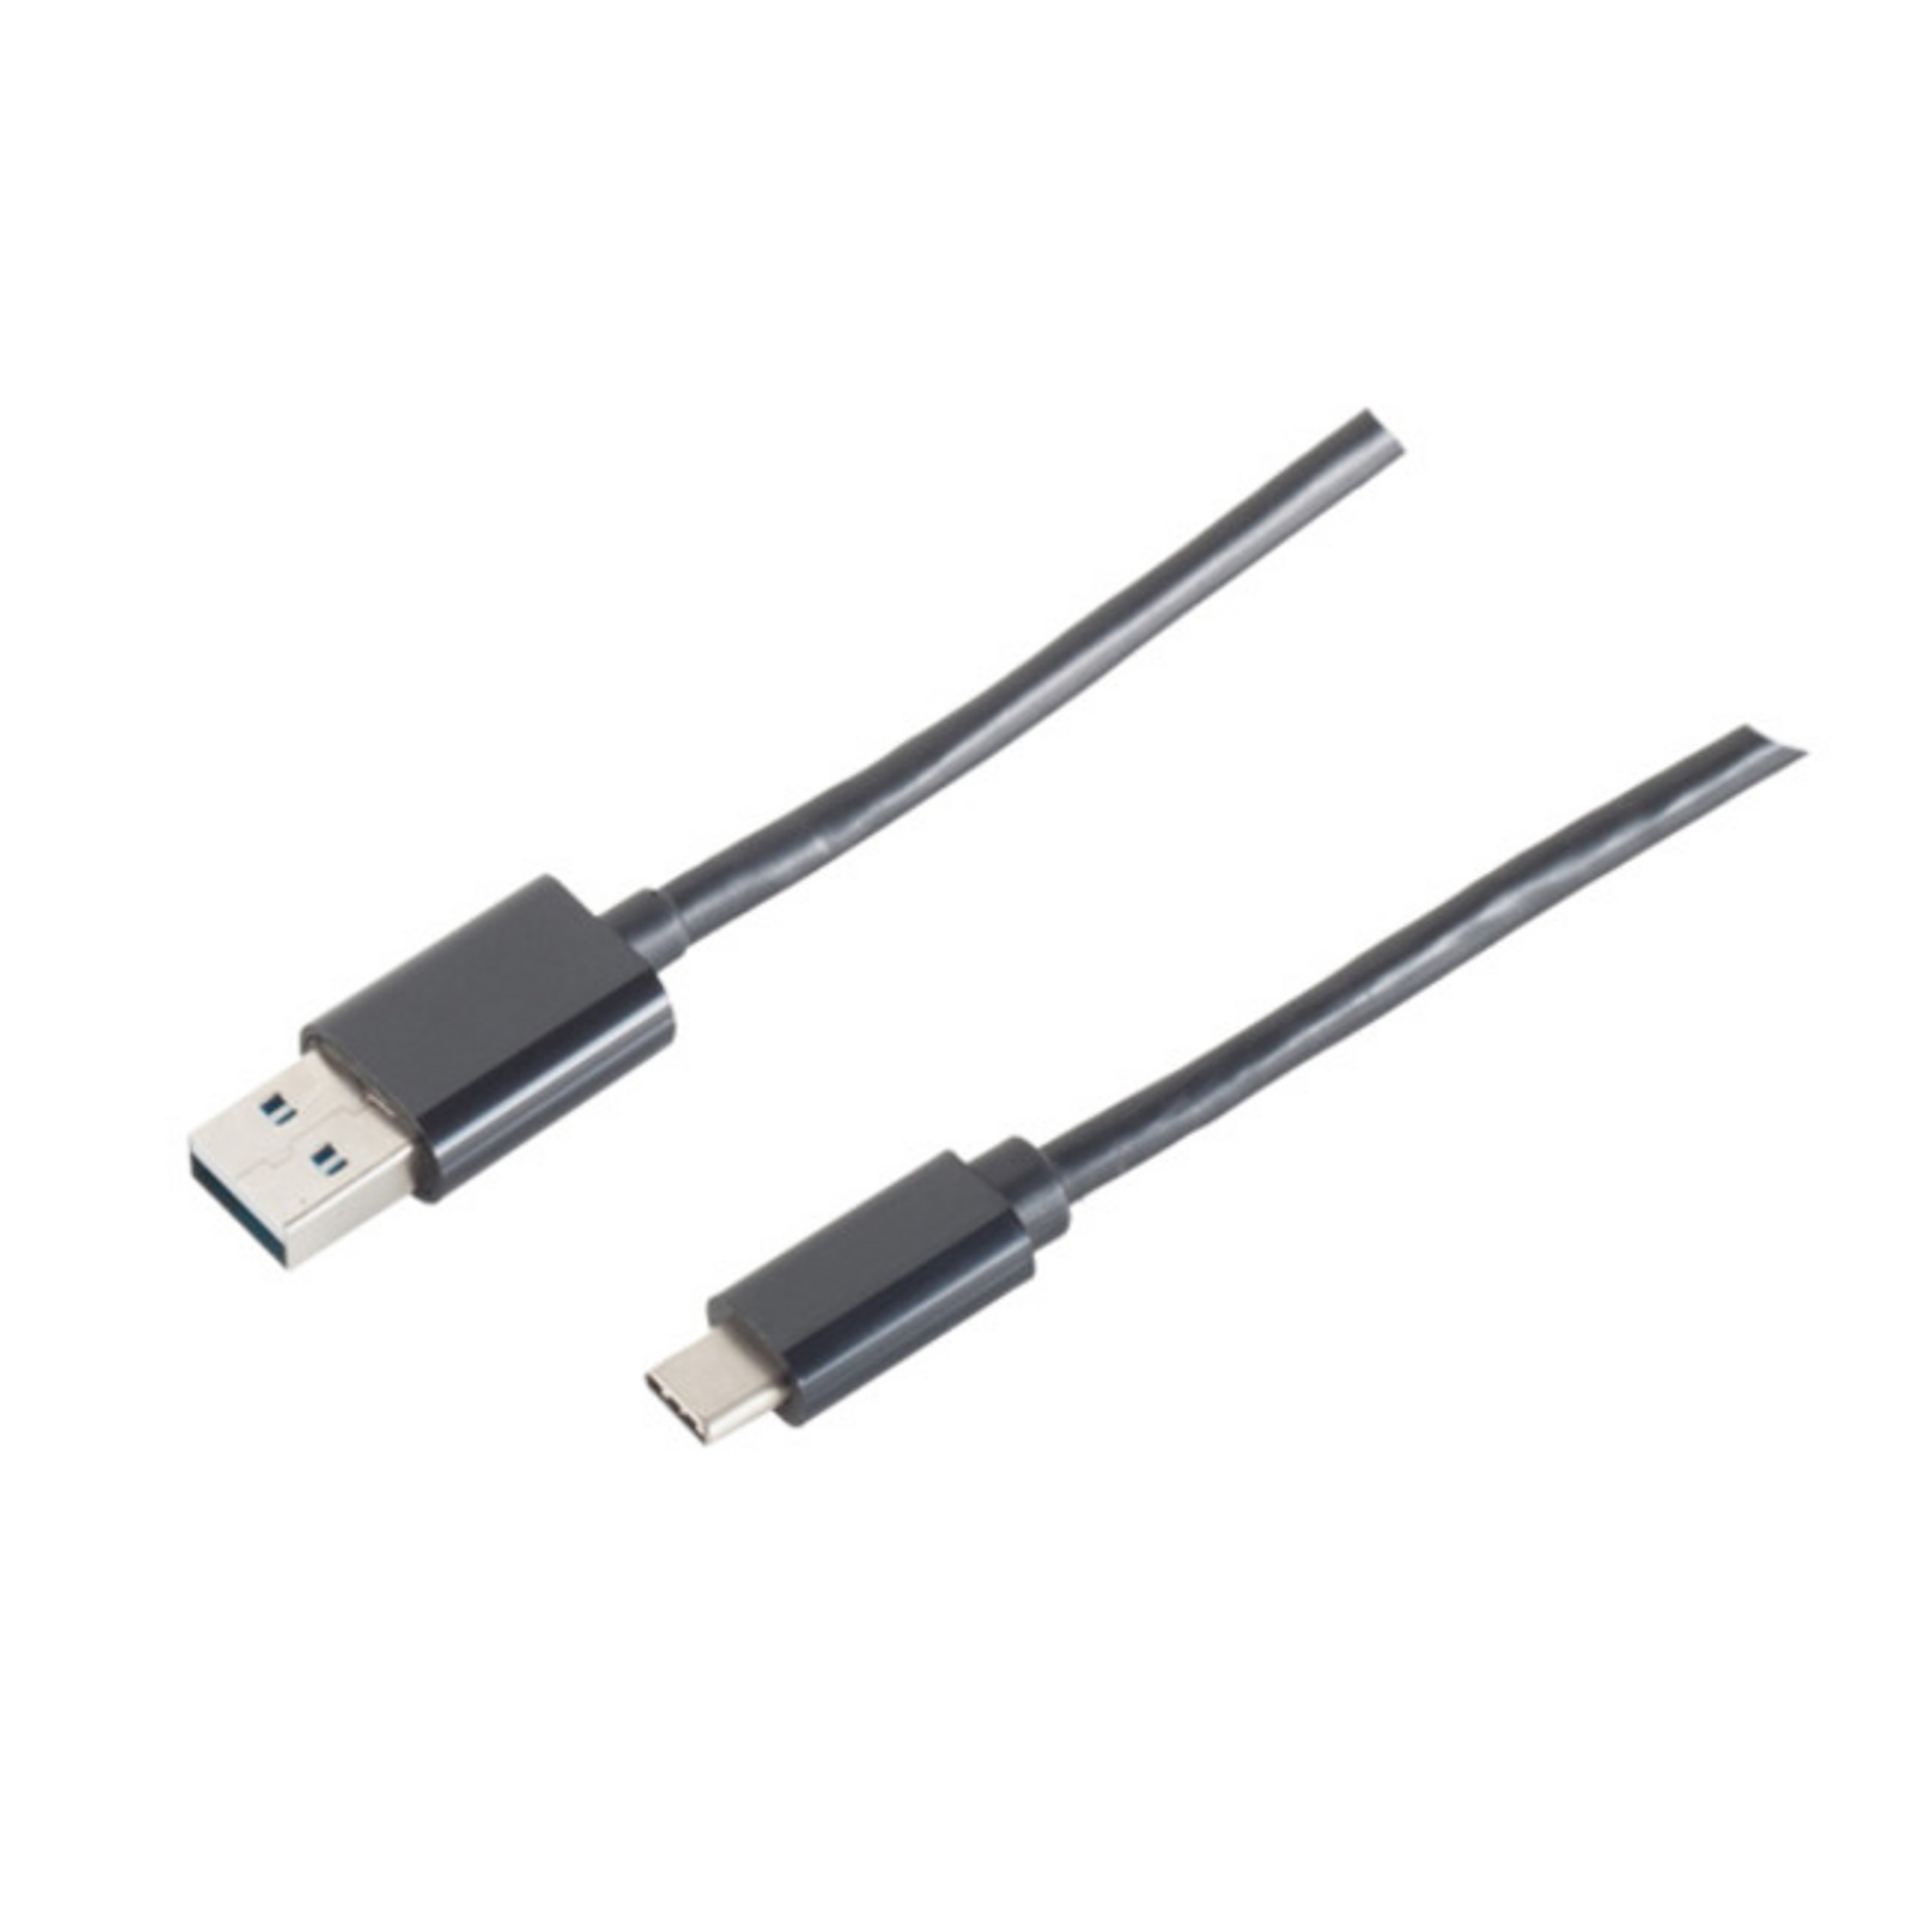 S/CONN MAXIMUM CONNECTIVITY USB 2.0 USB 3.1 schwarz, 1m Stecker, Stecker/ C USB Kabel A